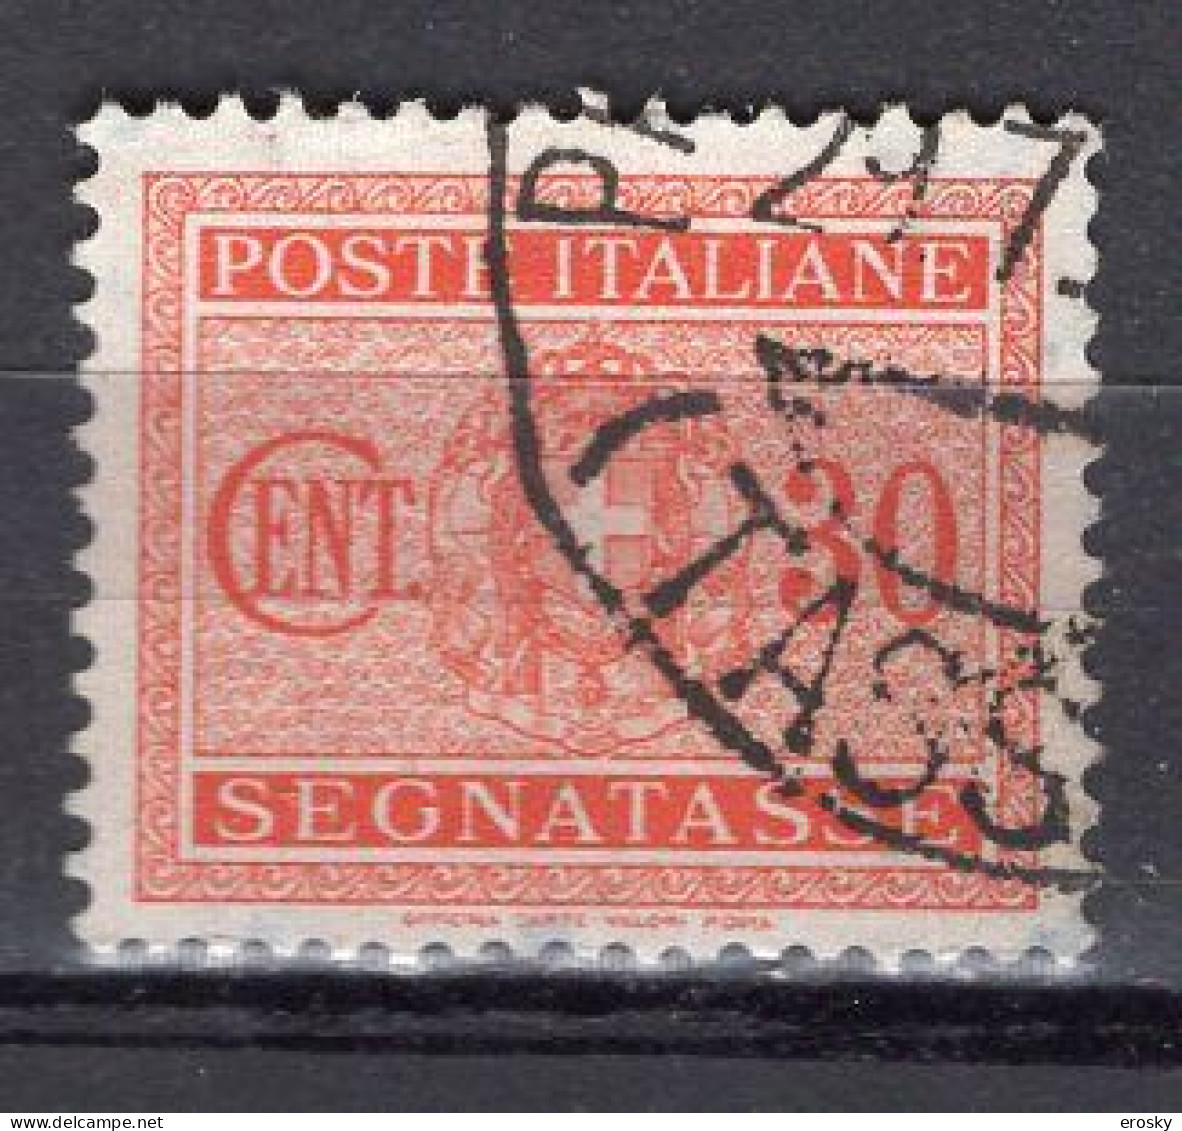 Z6179 - ITALIA REGNO TASSE SASSONE N°38 - Postage Due